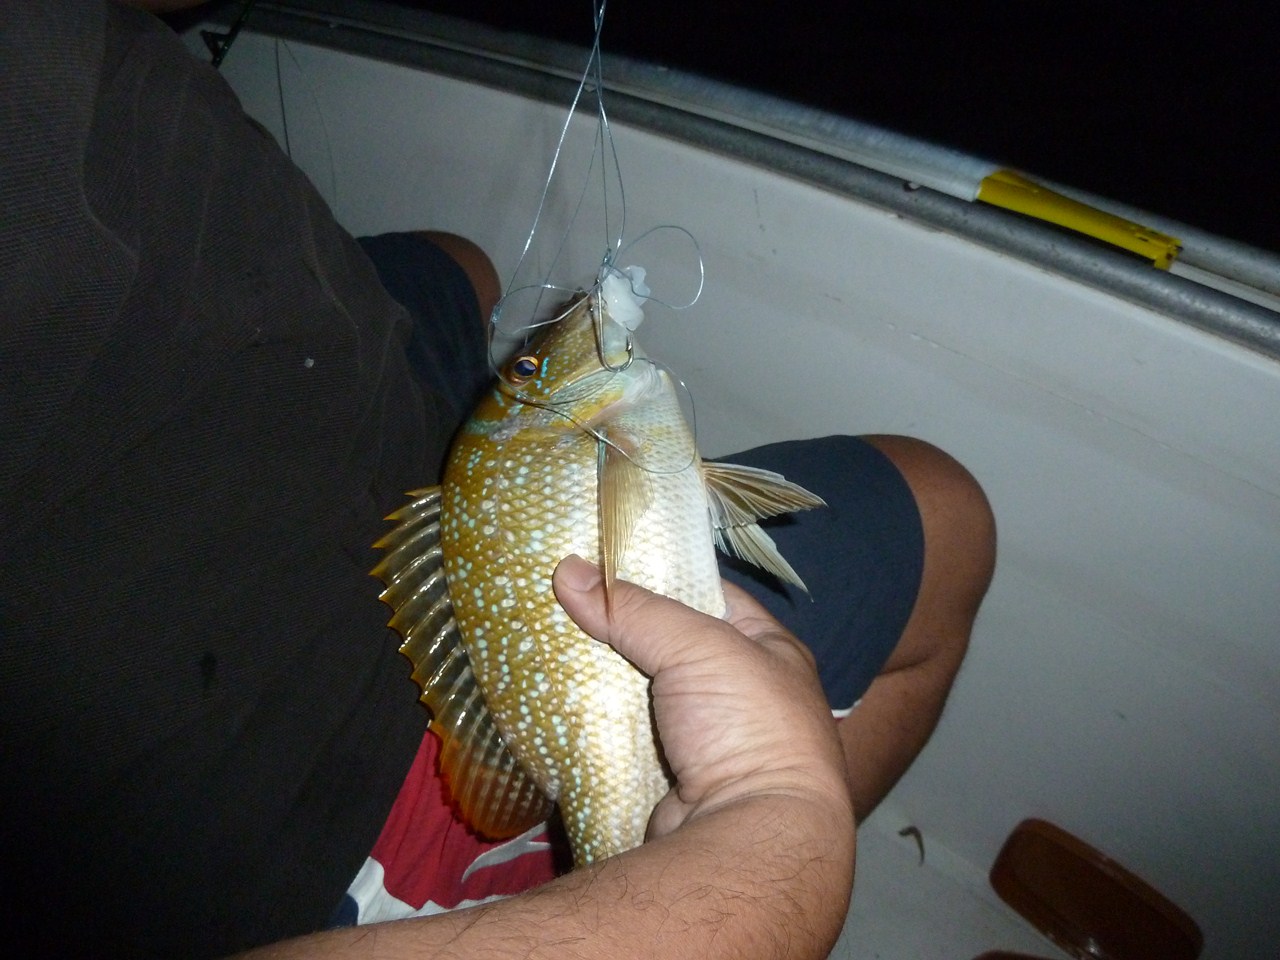 http://www.shintoko.jp/engblog/archives/images/2011/10/111028_qatarfishing930.jpg